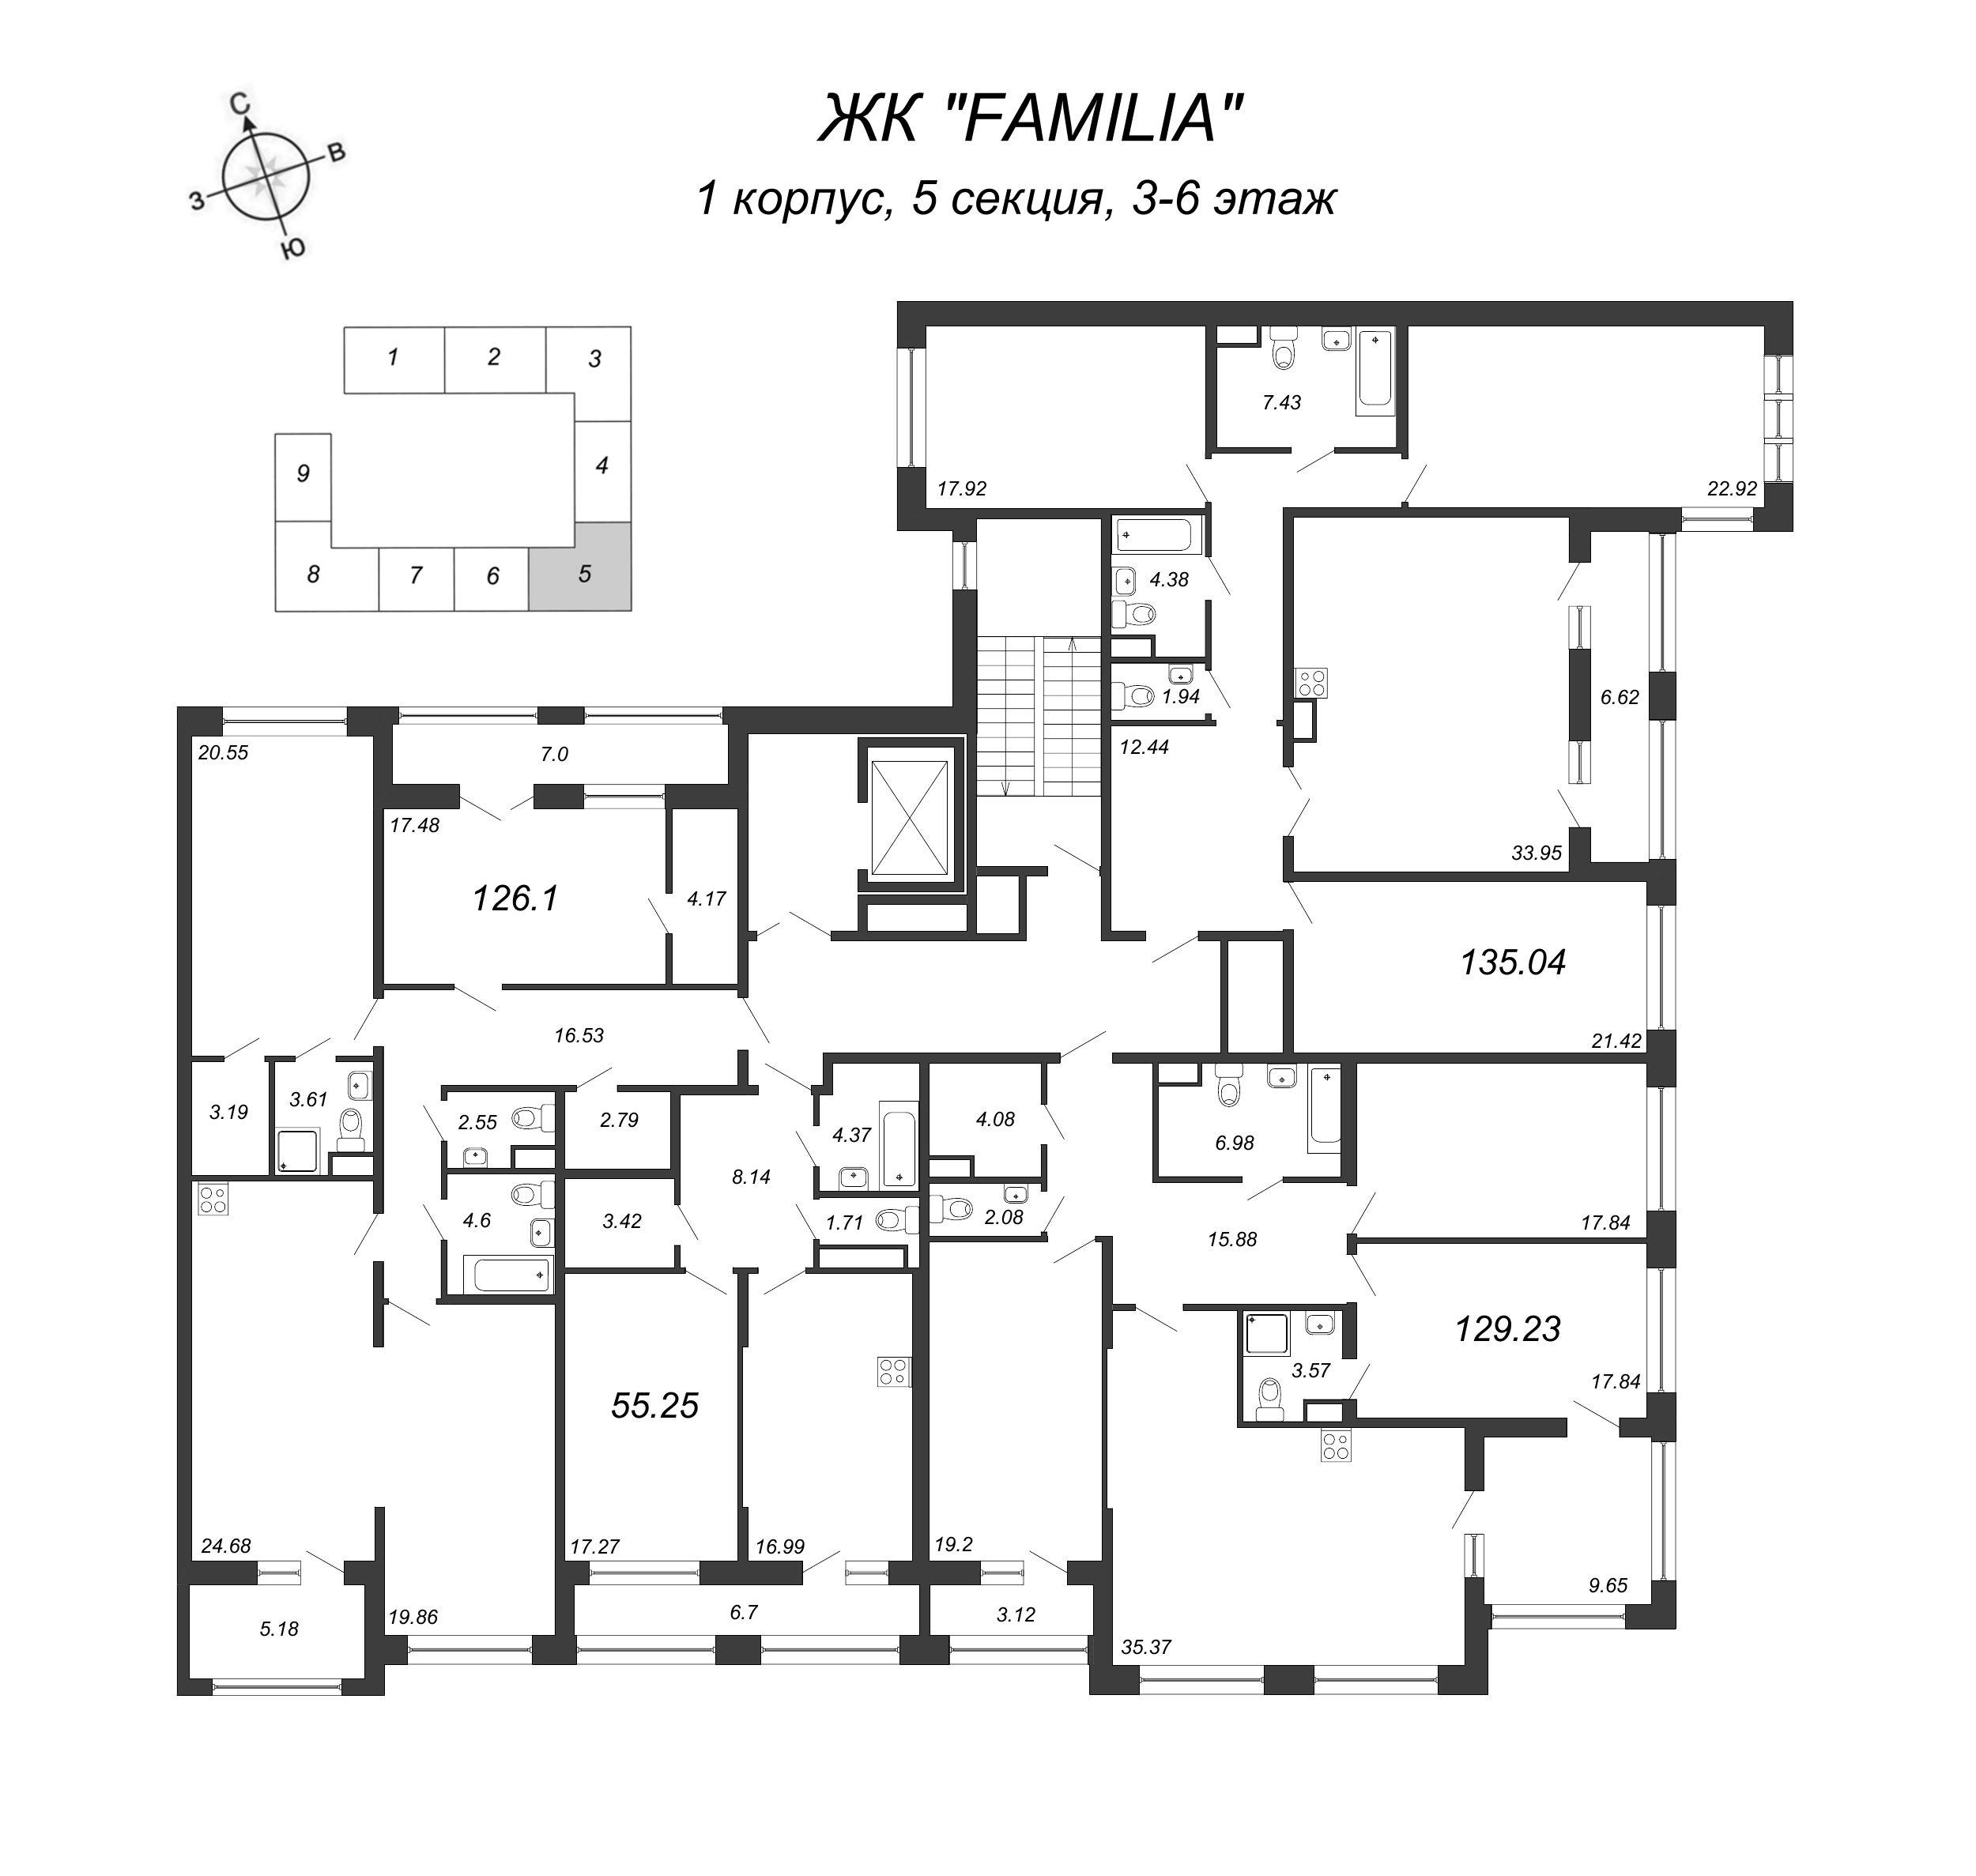 4-комнатная (Евро) квартира, 126.1 м² - планировка этажа